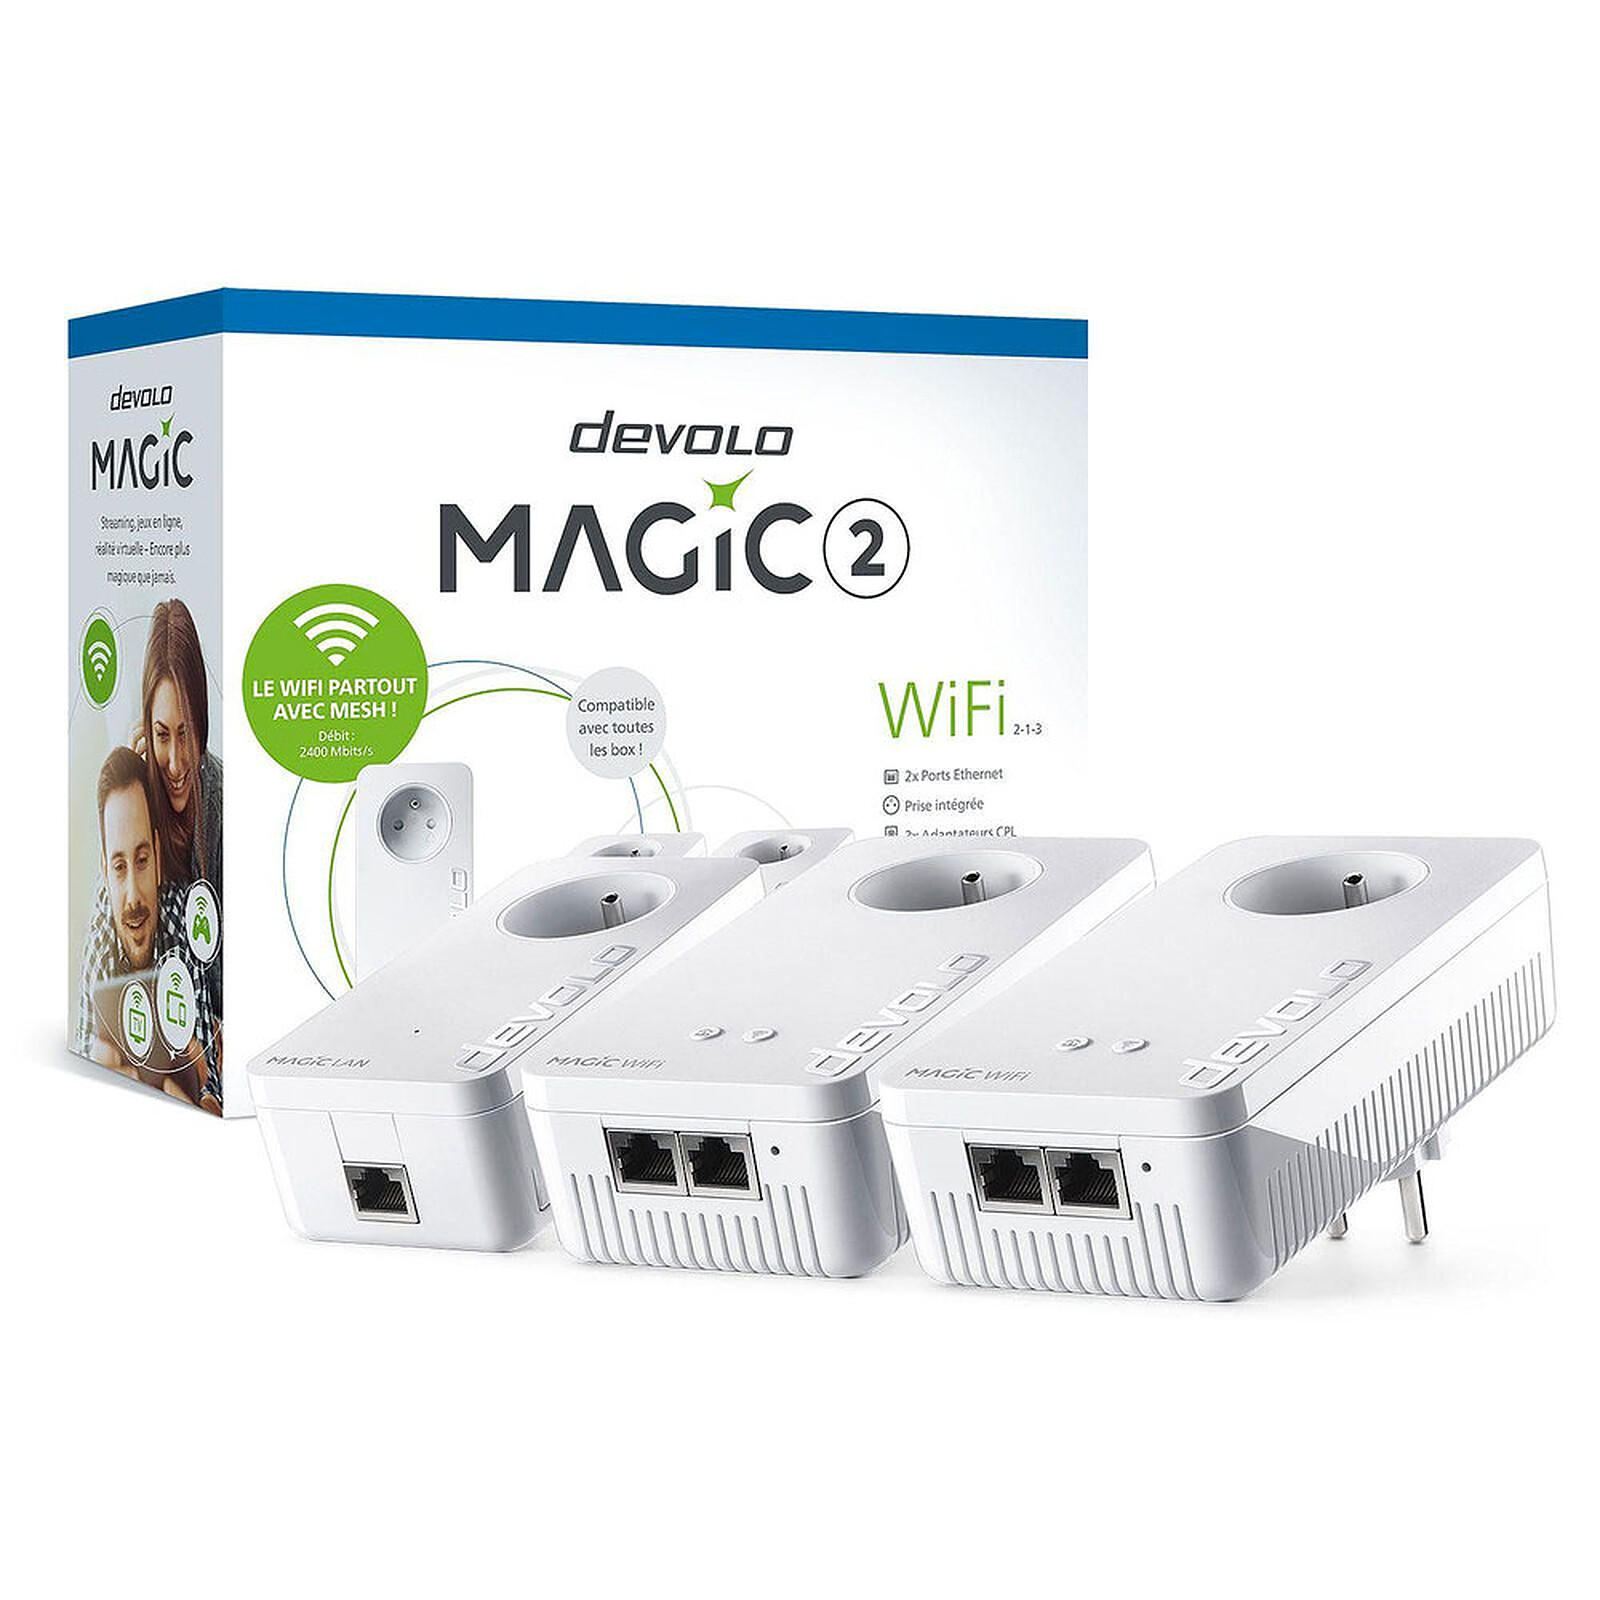 devolo Magic 2 WiFi next - Multiroom Kit - Powerline adapter